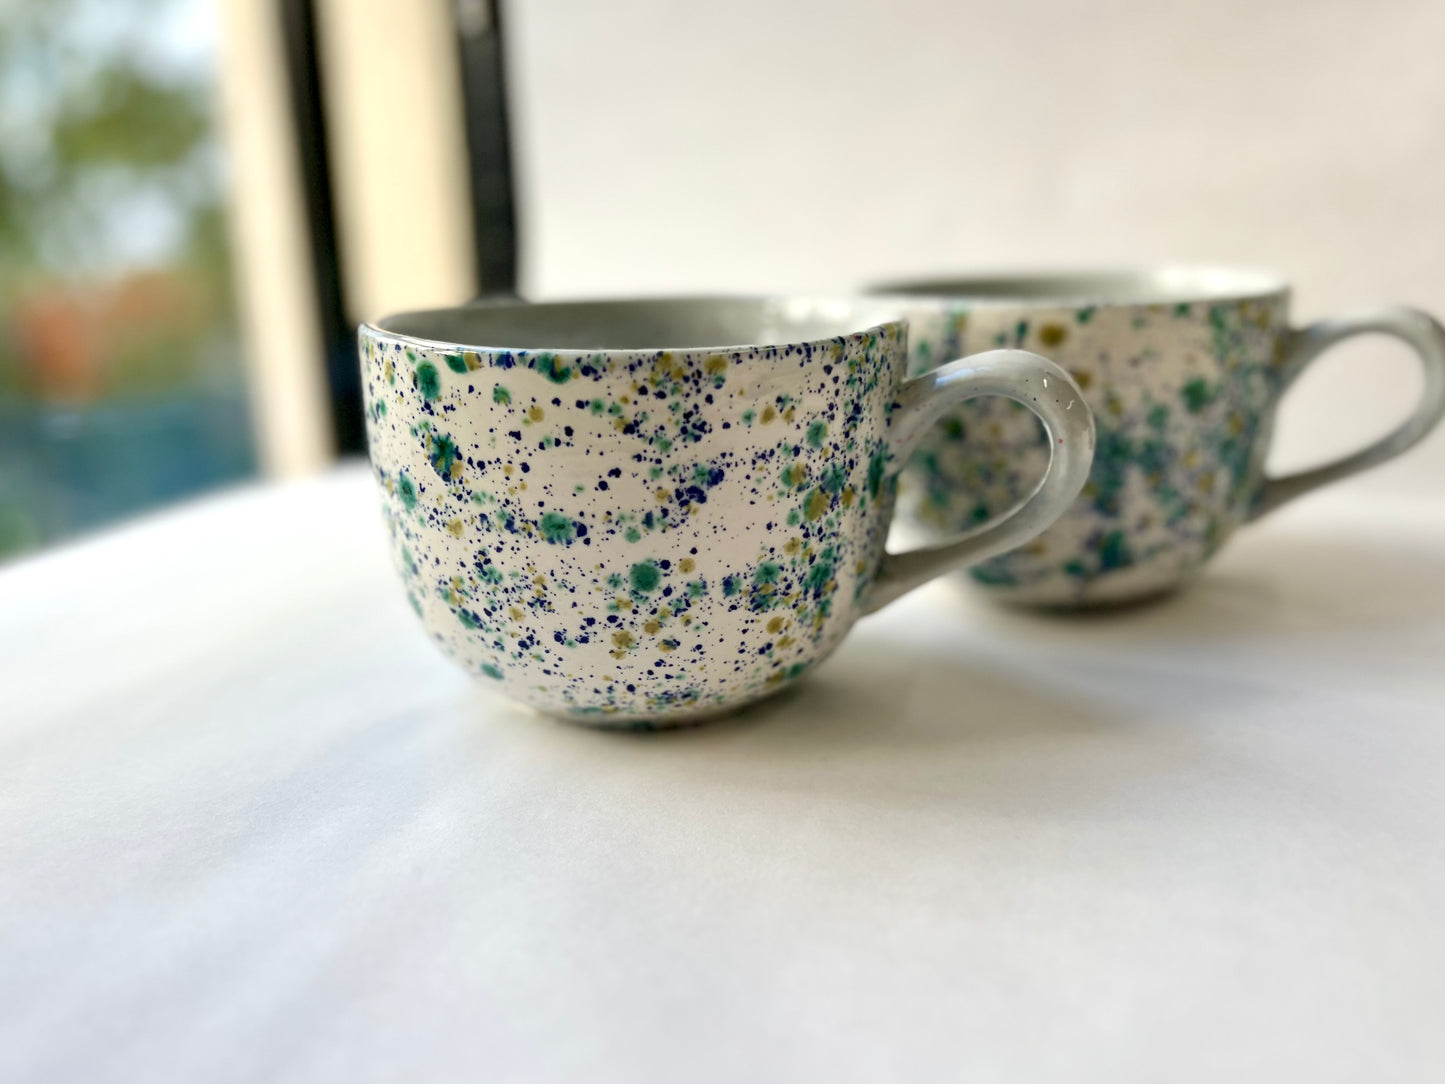 1 extra extra large seawind confetti latte mug - samples/seconds/sale pieces